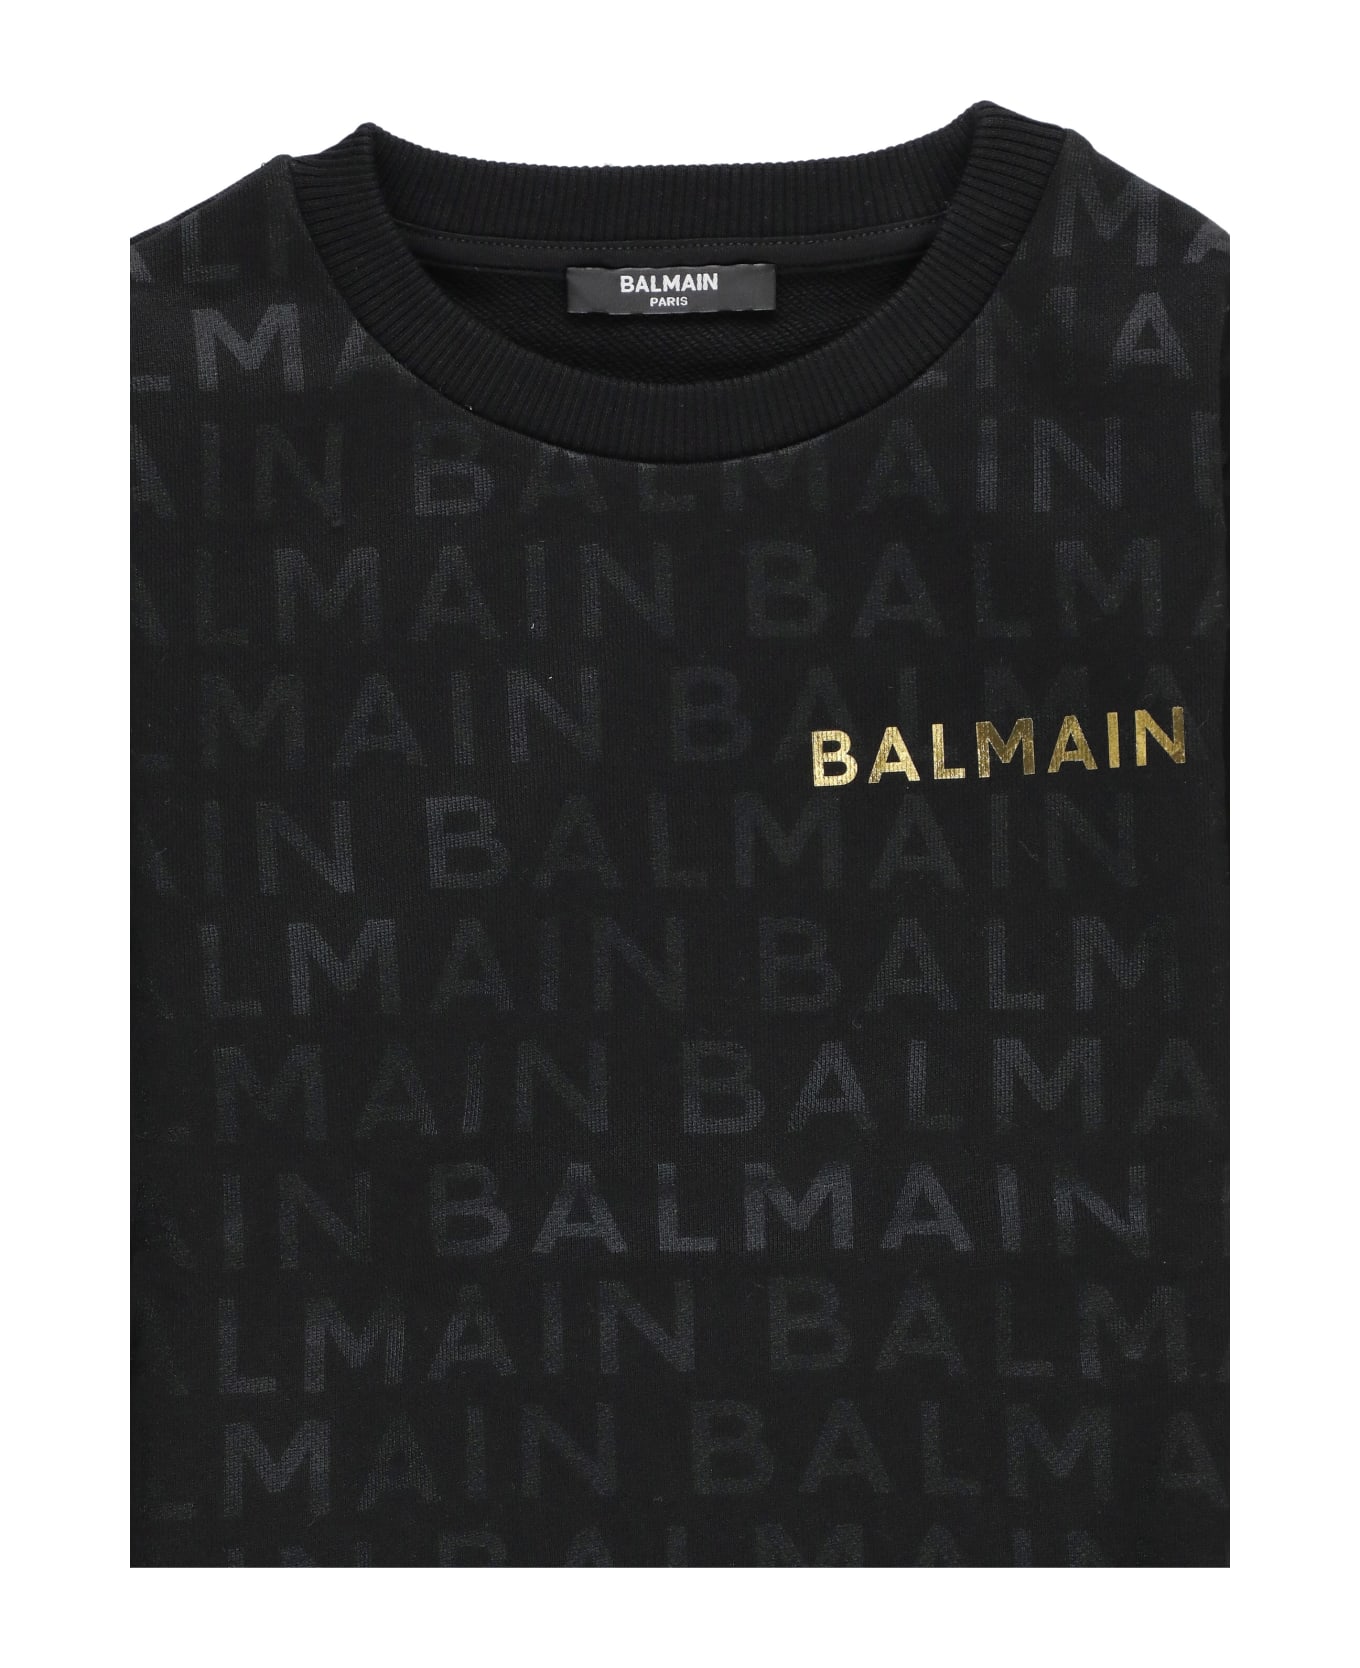 Balmain Sweatshirt With Logo - Black